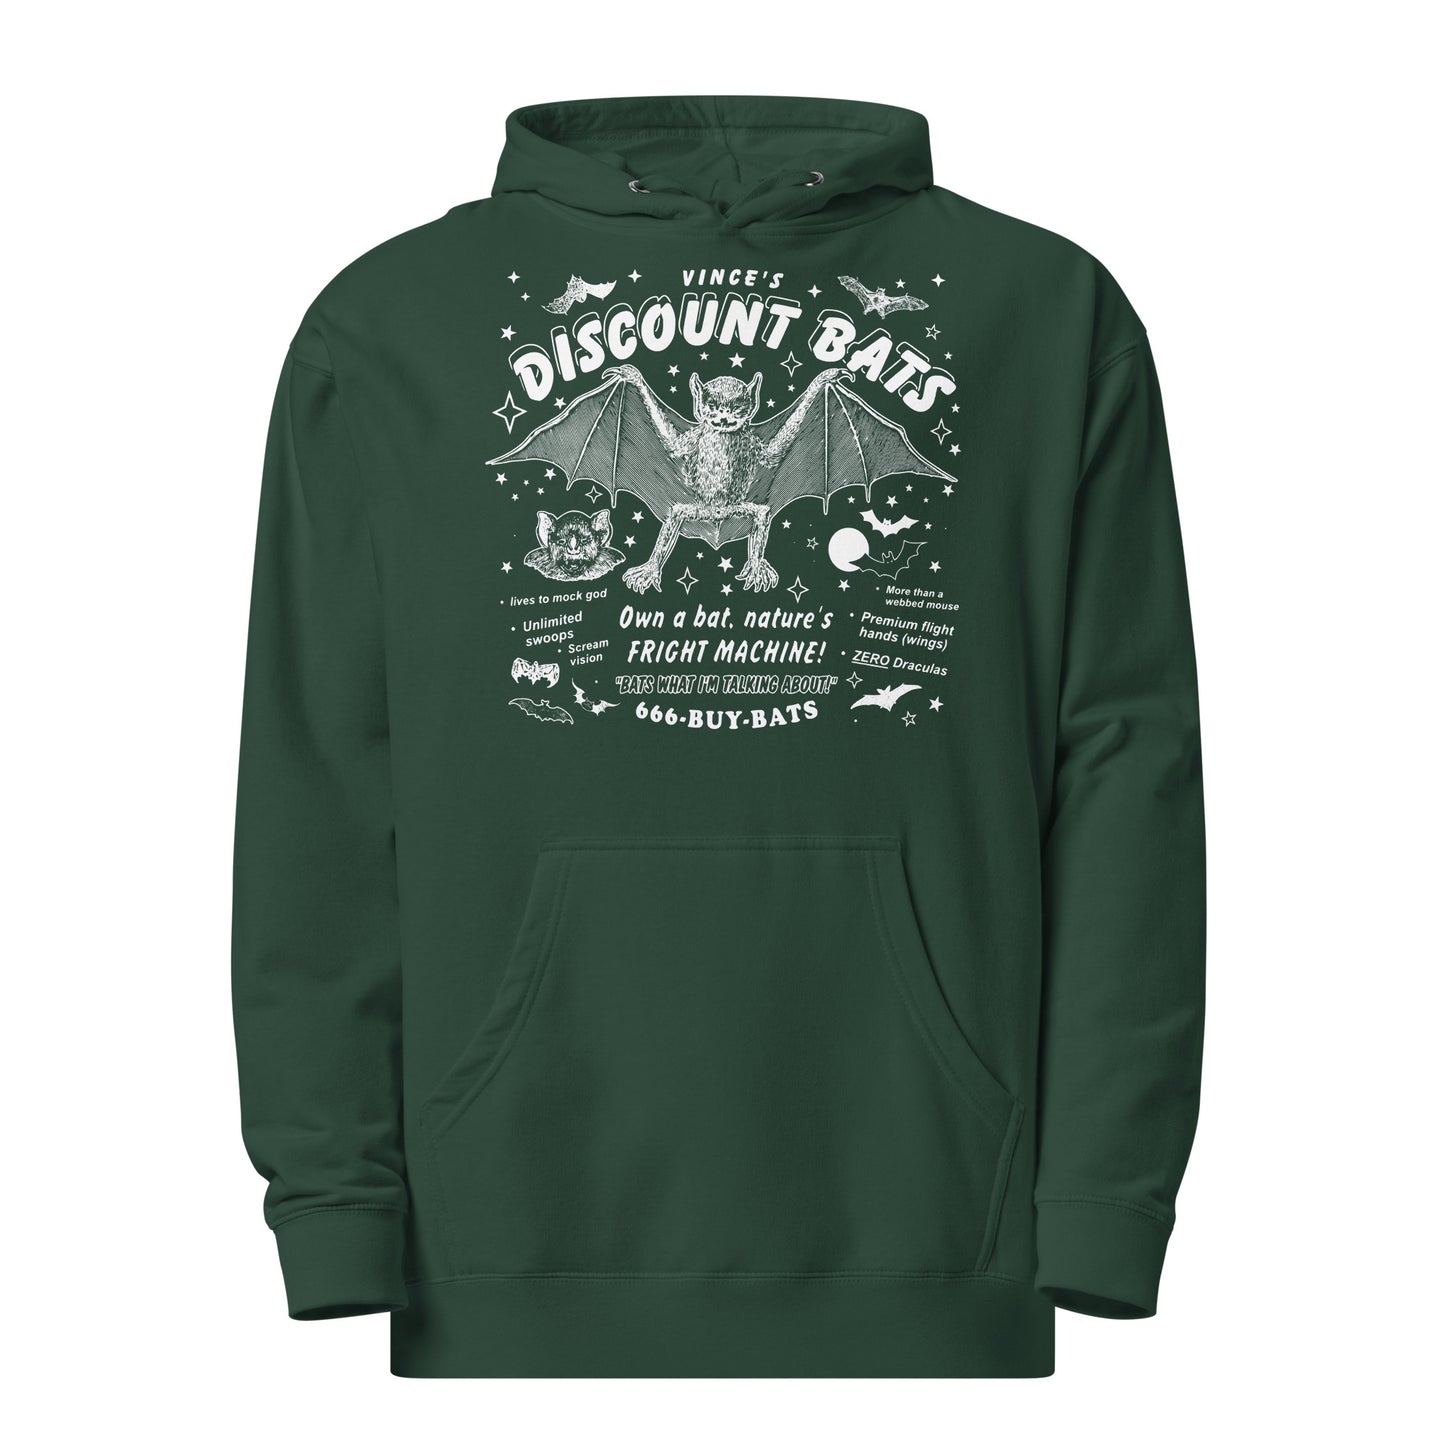 "Discount Bats" Unisex midweight hoodie